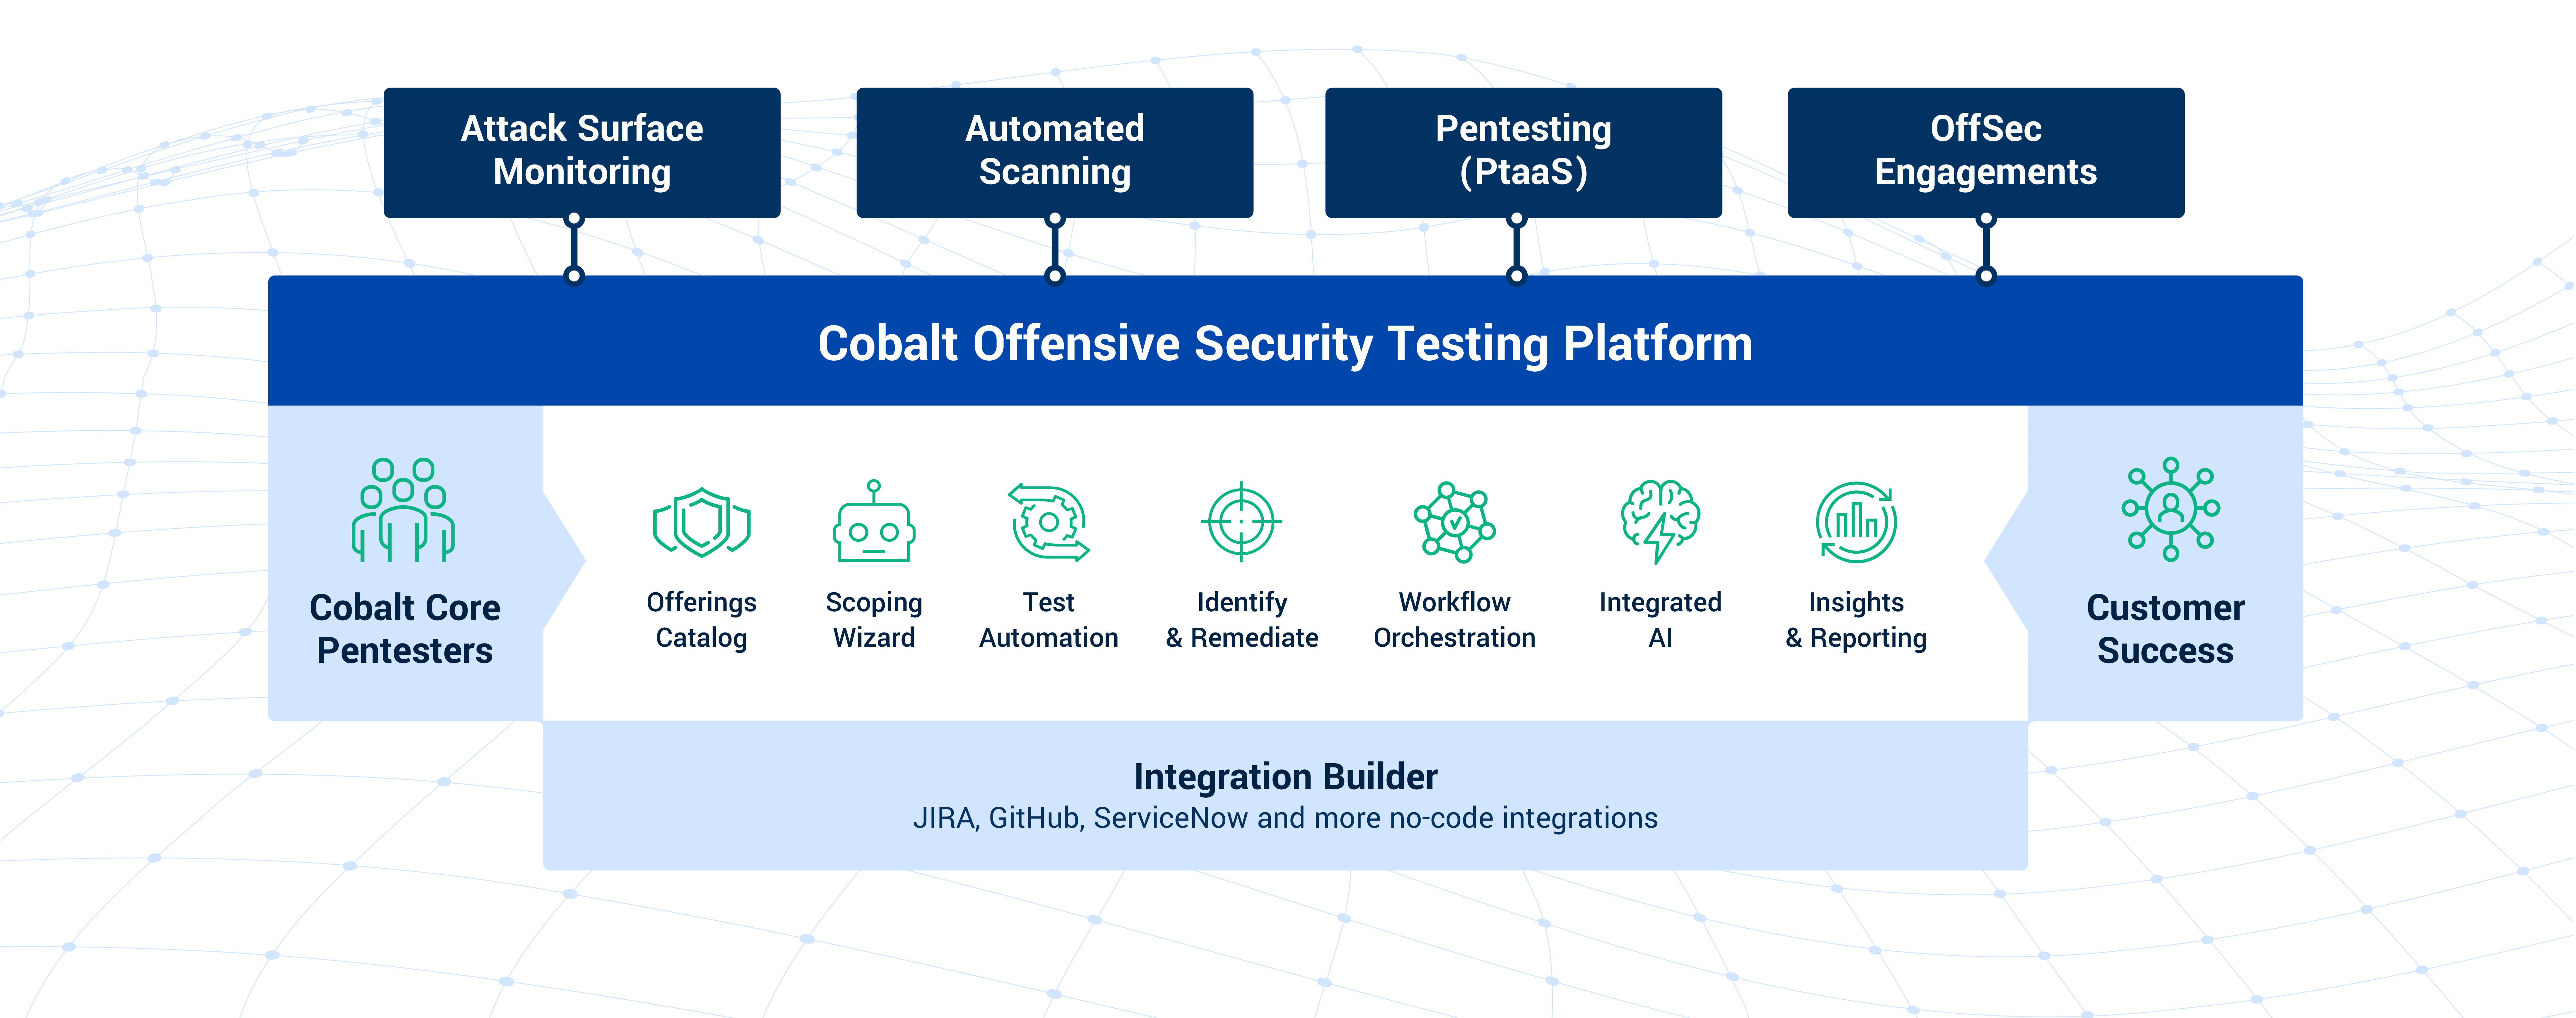 Cobalt-Offensive-Security-Testing-Platform-Marketecture (1)